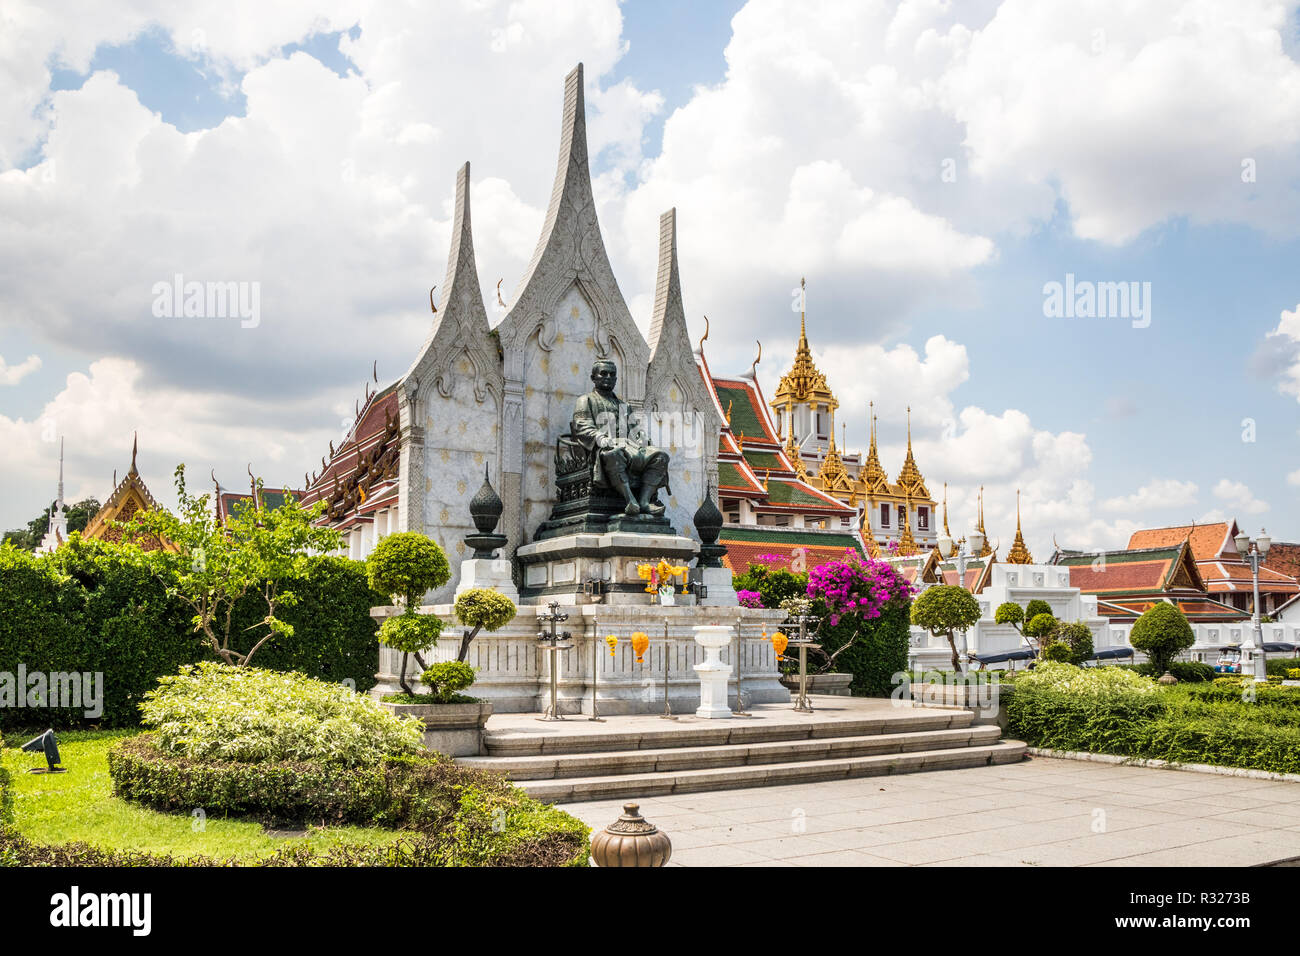 Statue du Roi Rama III en face de Wat Ratchanadda, Loha Prasat, Bangkok. Les 37 clochers tout métal symbolisent les 37 vertus qui mènent à l'illumination Banque D'Images